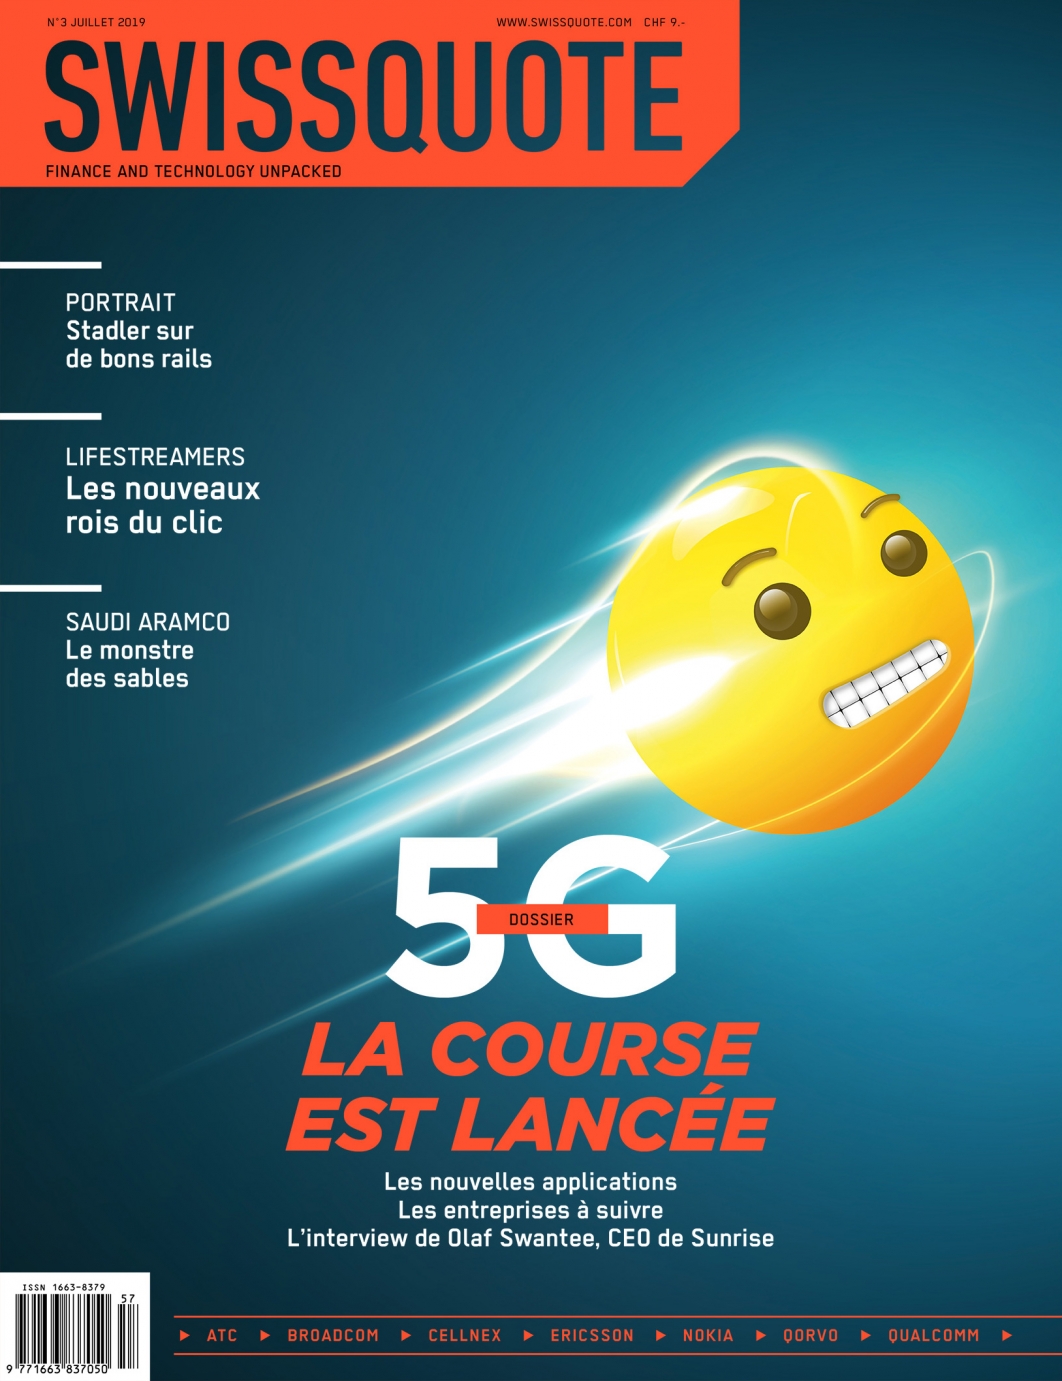 magazine article on 5g technology